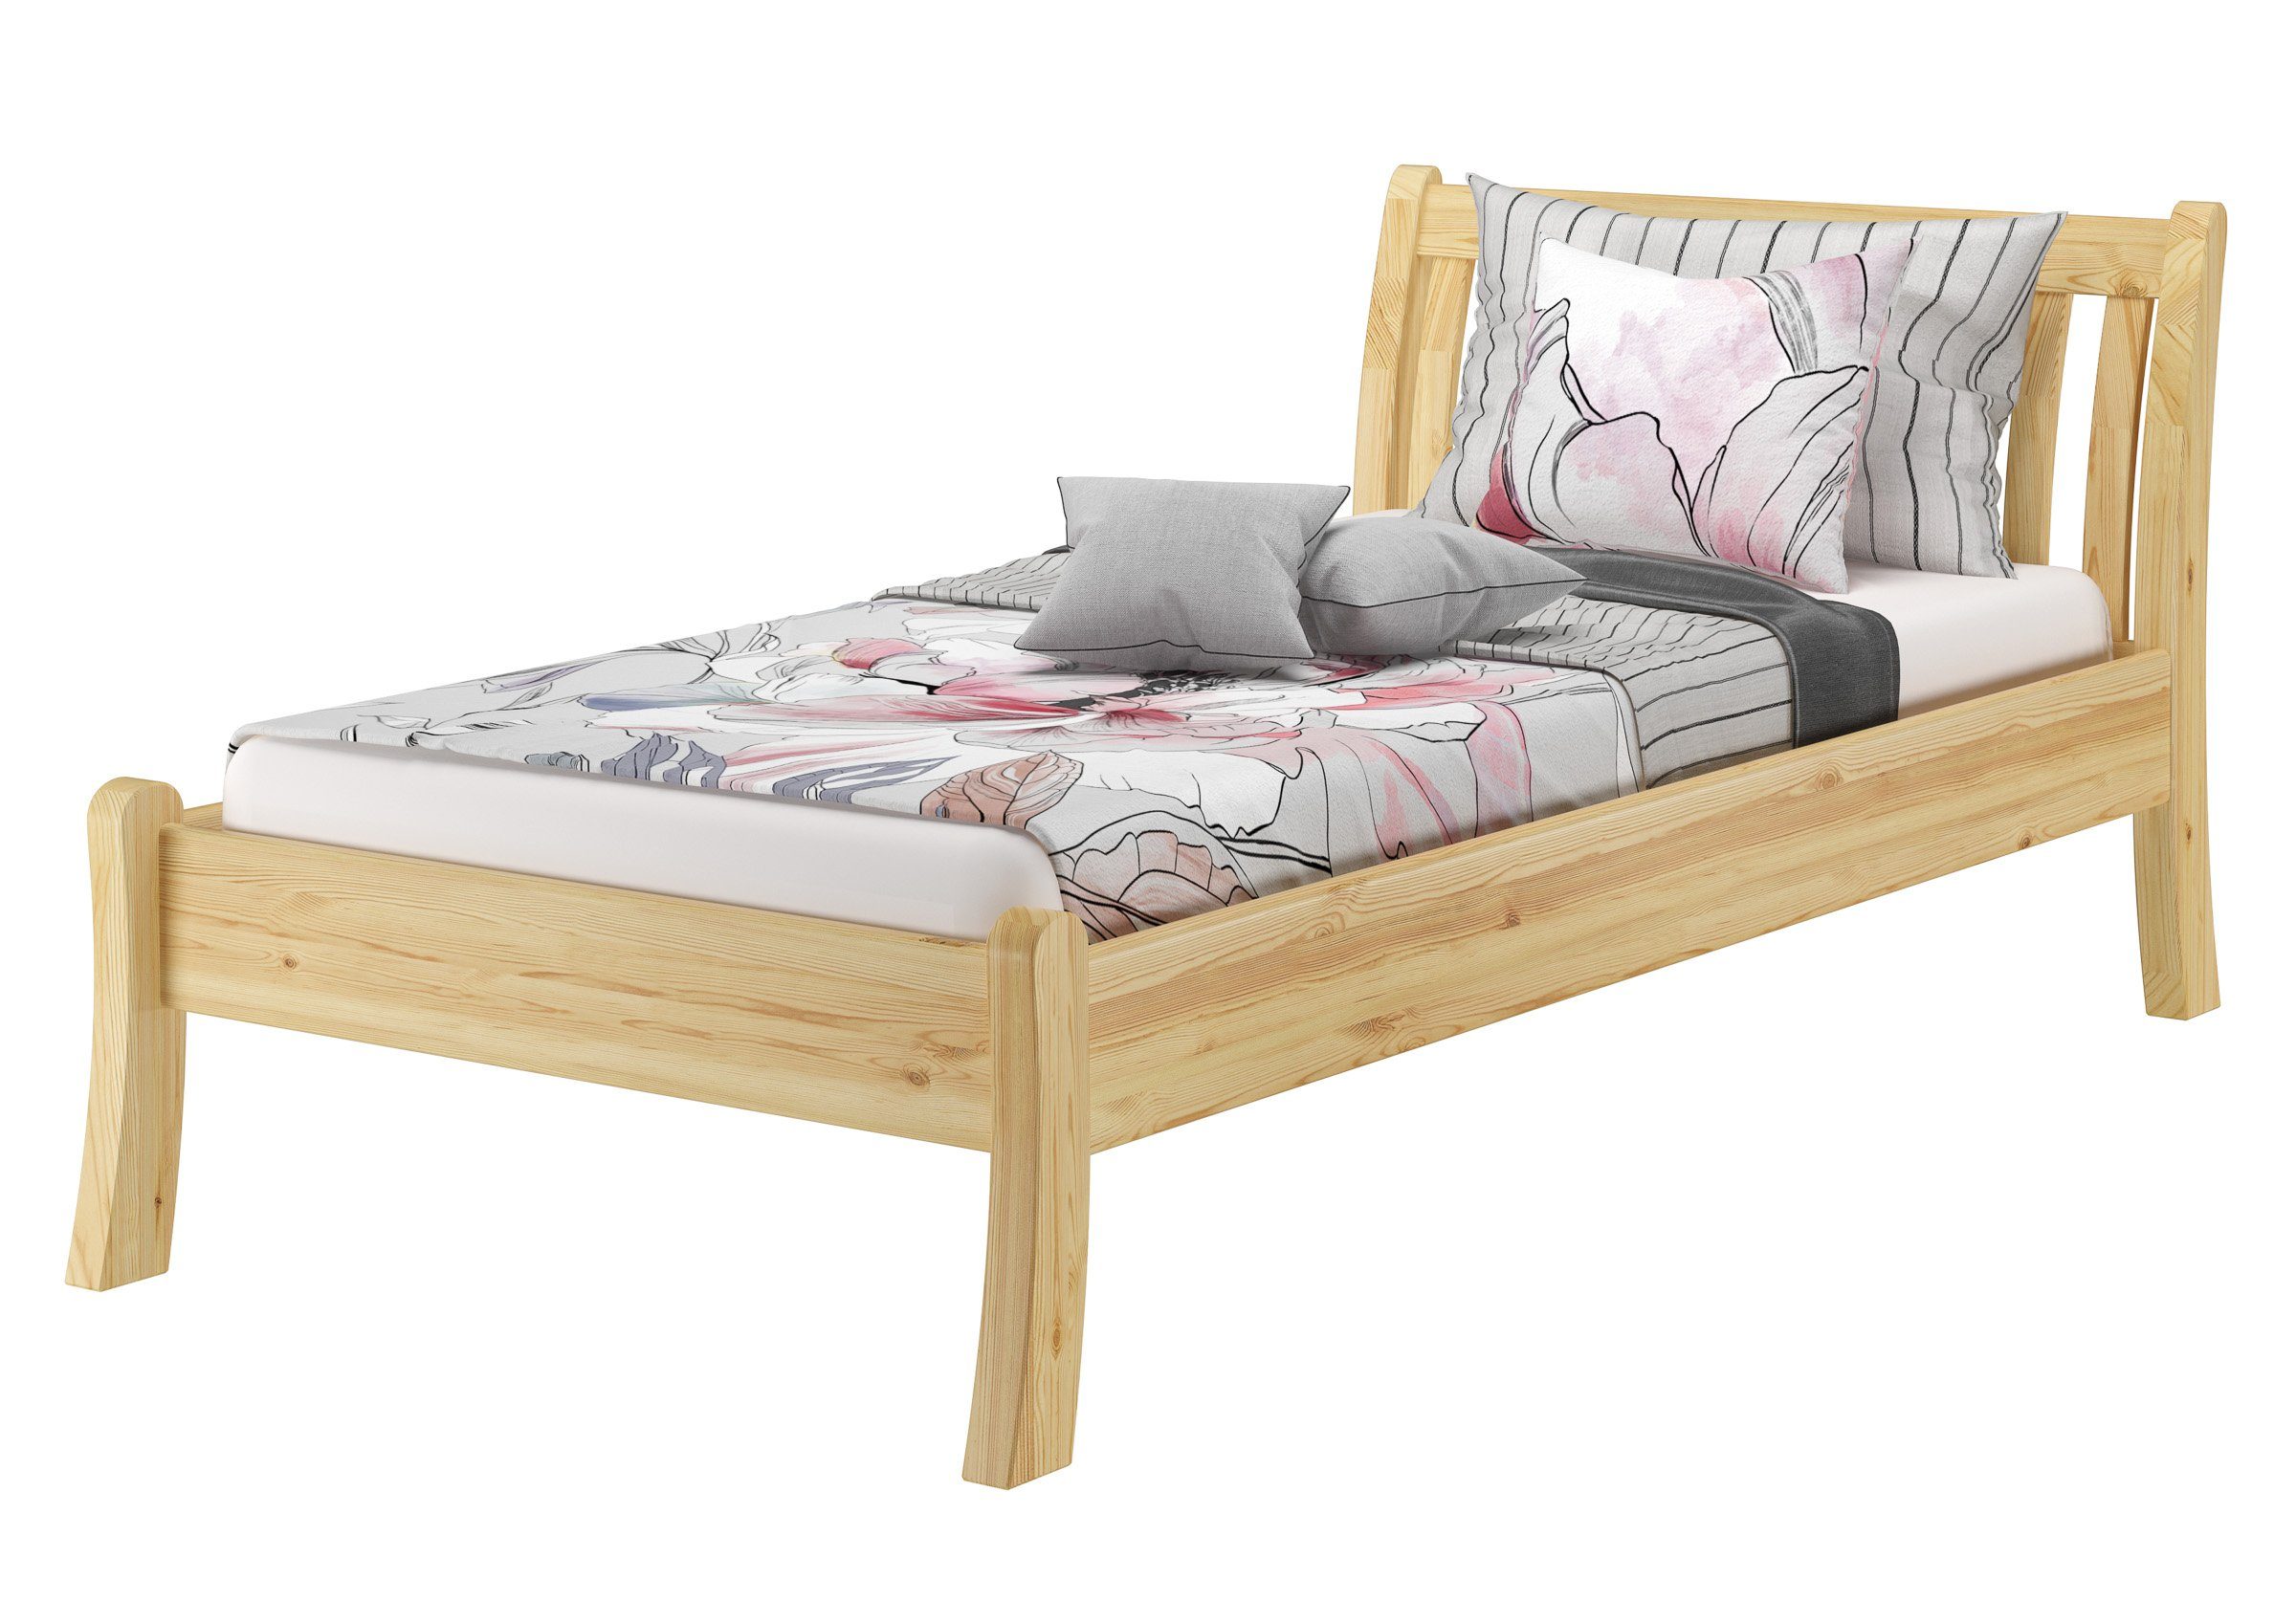 massiv Kieferfarblos lackiert Holzbett 100x200 ERST-HOLZ cm, Kiefer Bett Sitzkante hohe